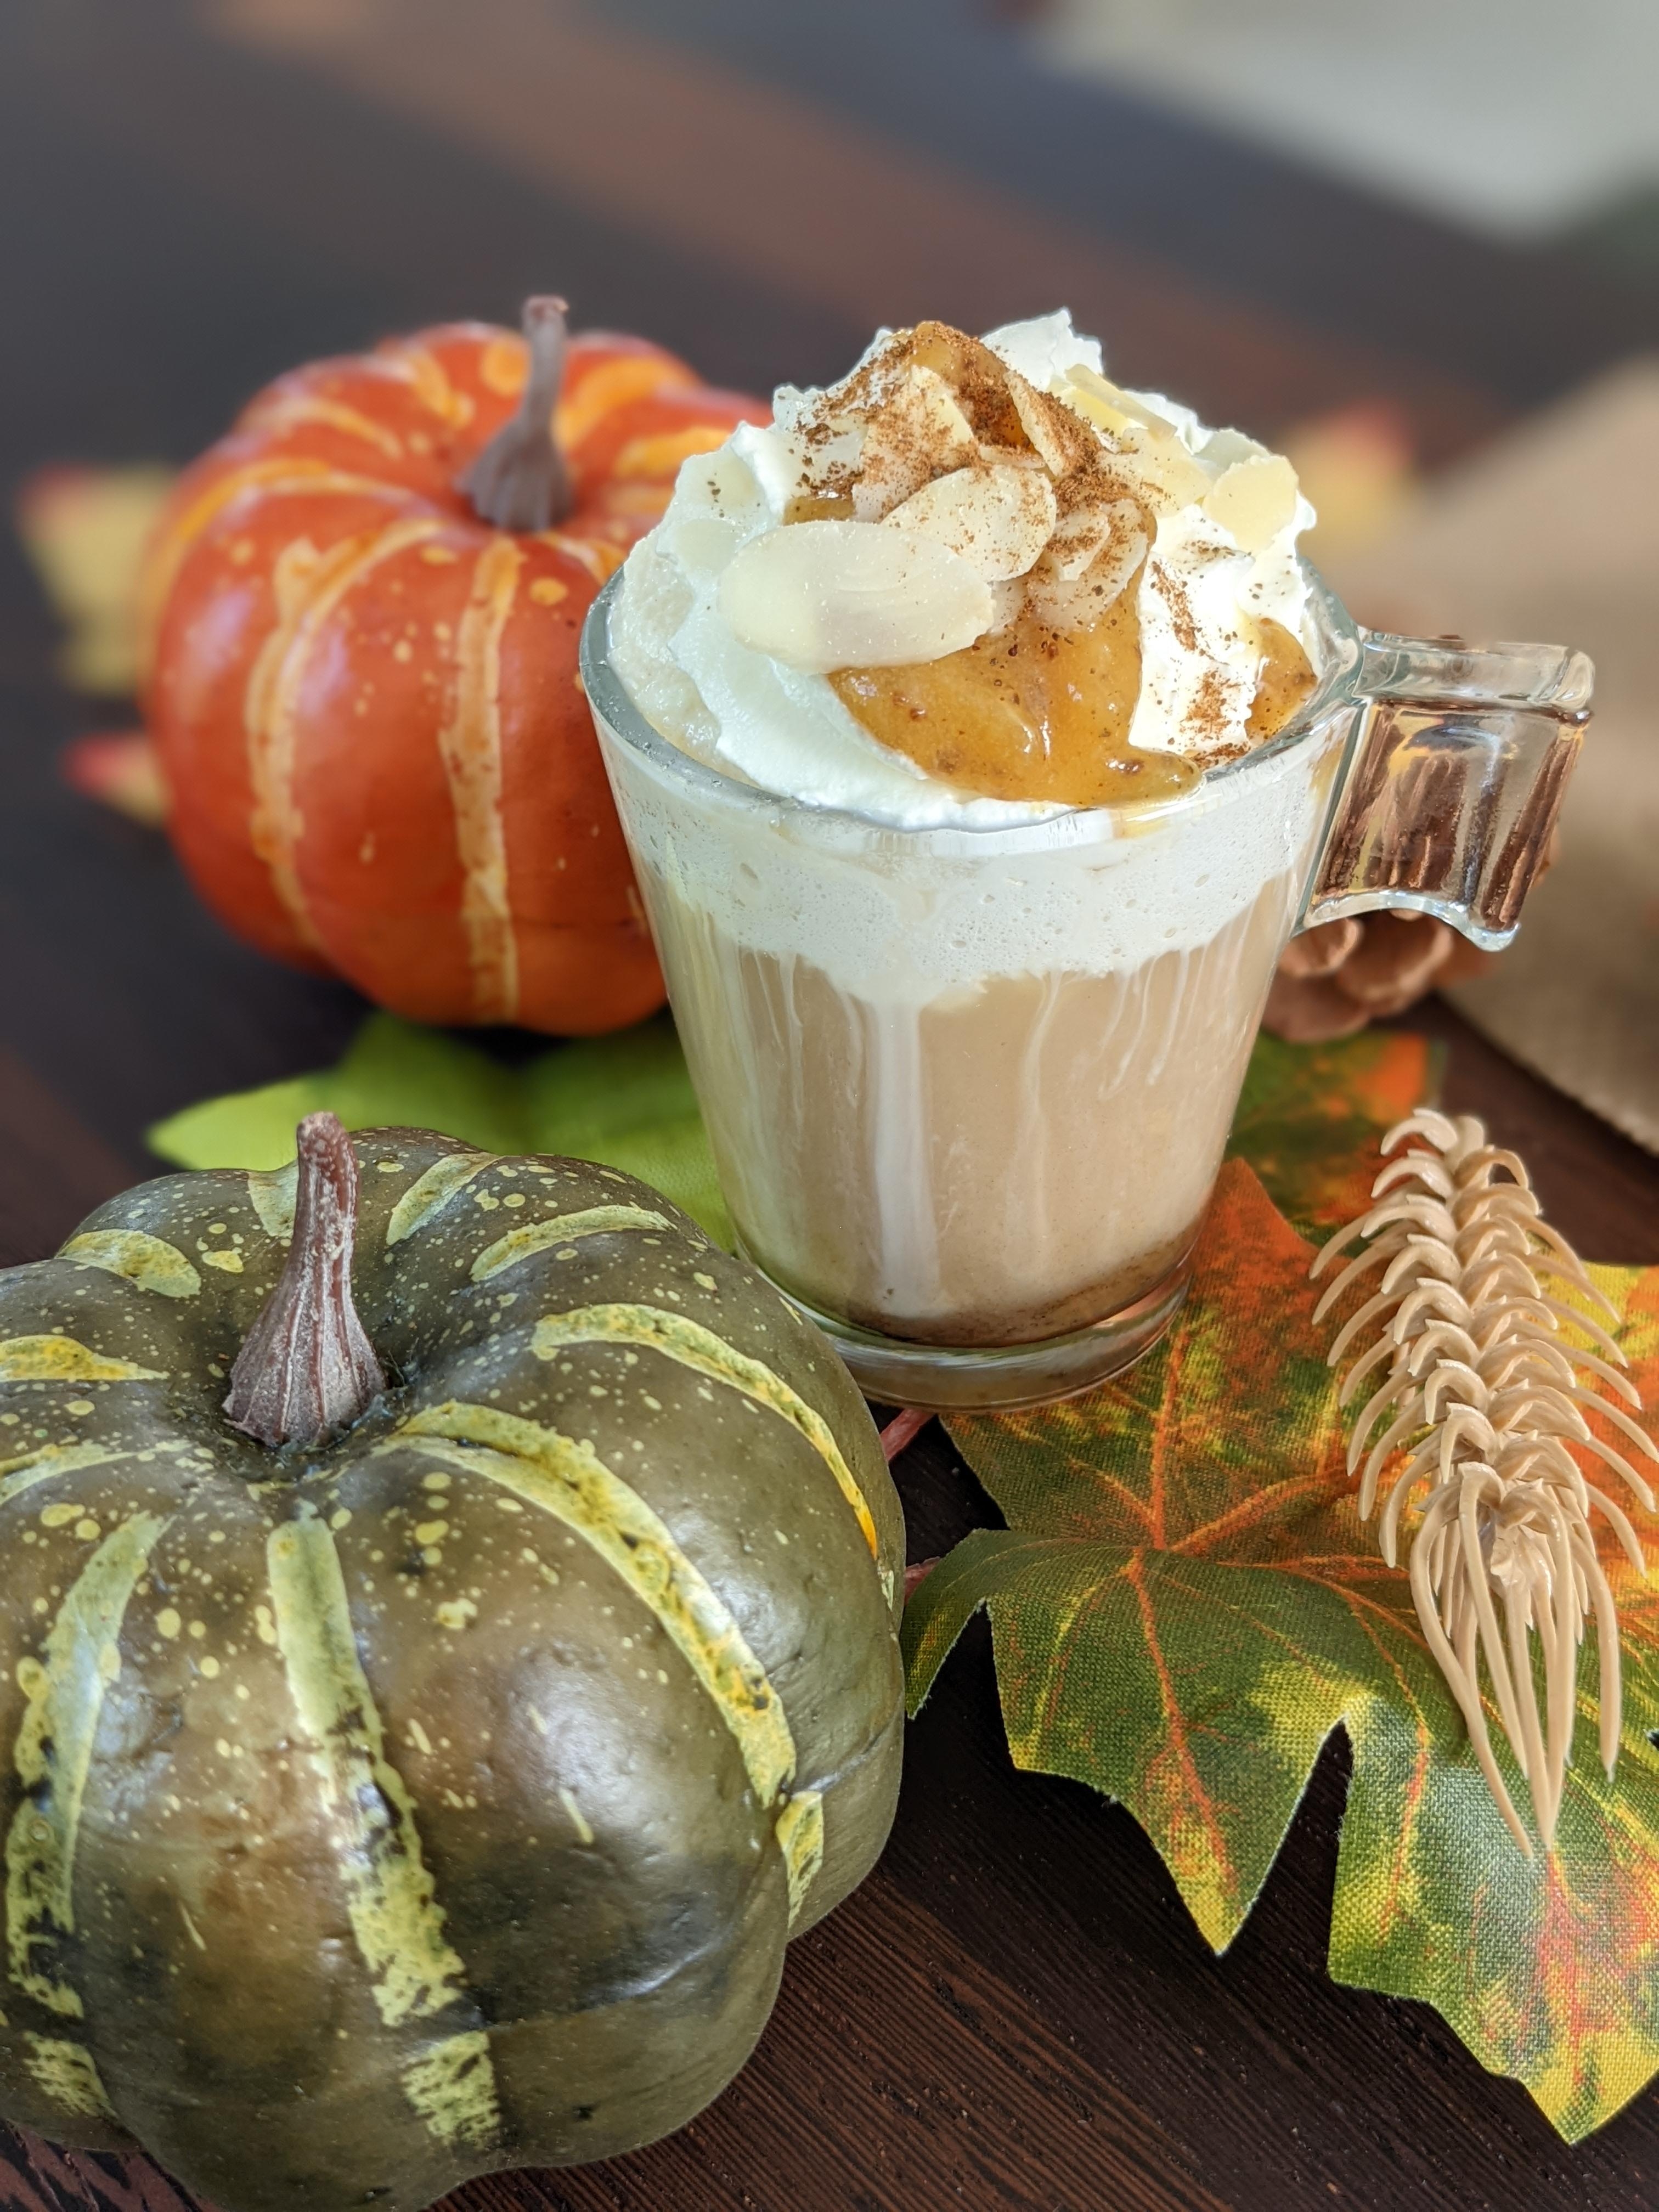 Herbst-Kaffee mit leckerem Schaum und Topping.☕🍂🍁
#kaffeeliebe #livingchallenge #herbst #kürbis #kaffee #thanksgiving